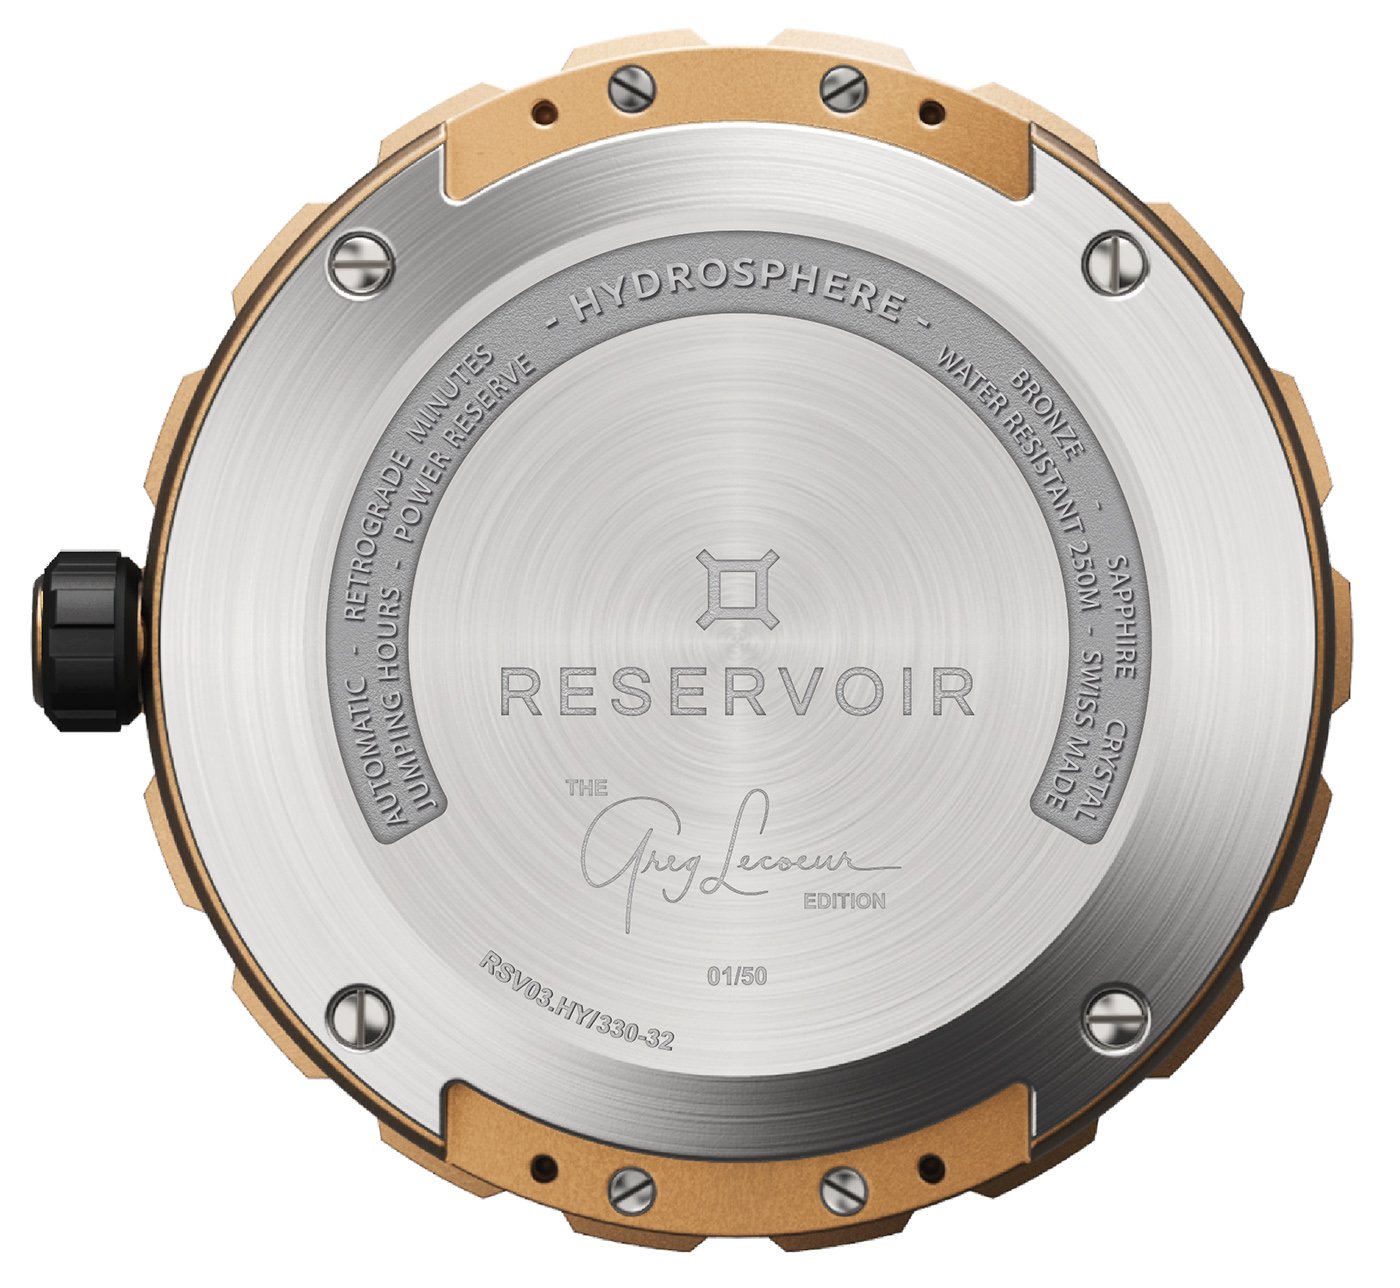 Reservoir представляет лимитированные часы Hydrosphere - Greg Lecoeur Edition Watch